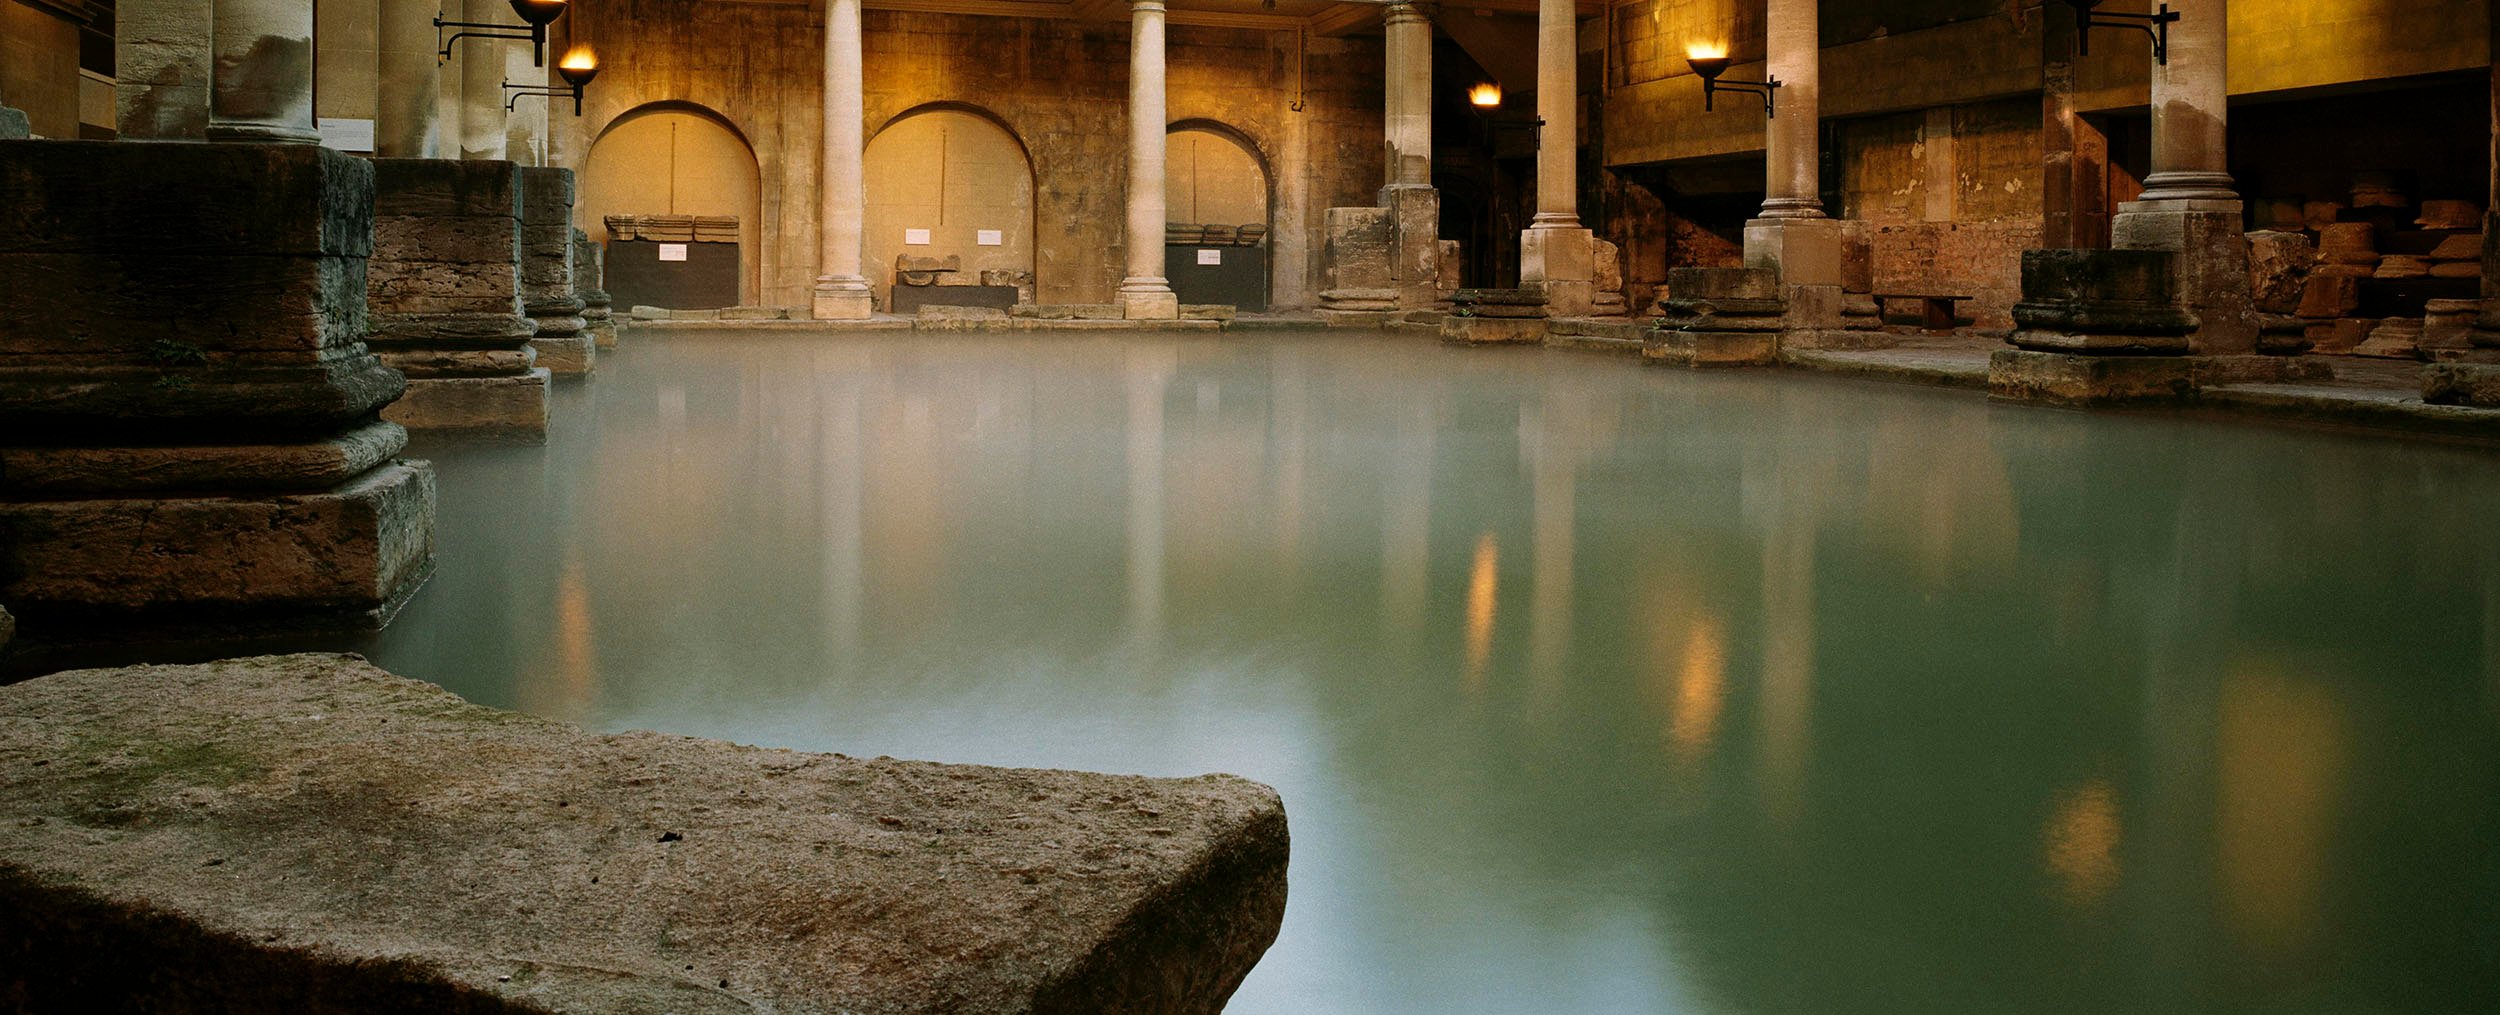 The Roman Baths, Bath, Somerset